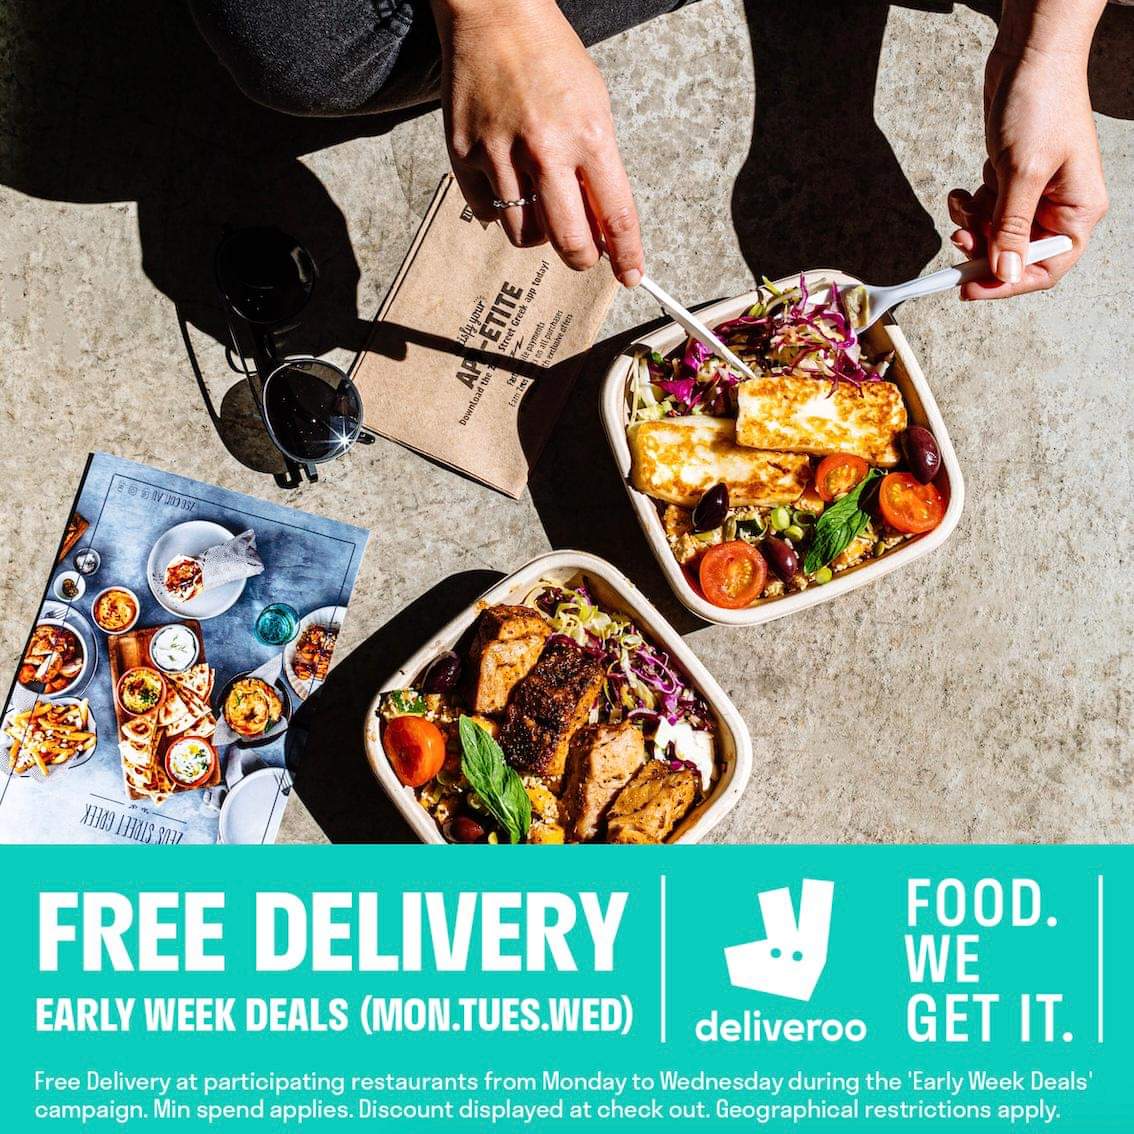 DEAL: Zeus Street Greek - Free Delivery on Orders over $25 on Mondays-Wednesdays via Deliveroo (until 5 July 2021) 7